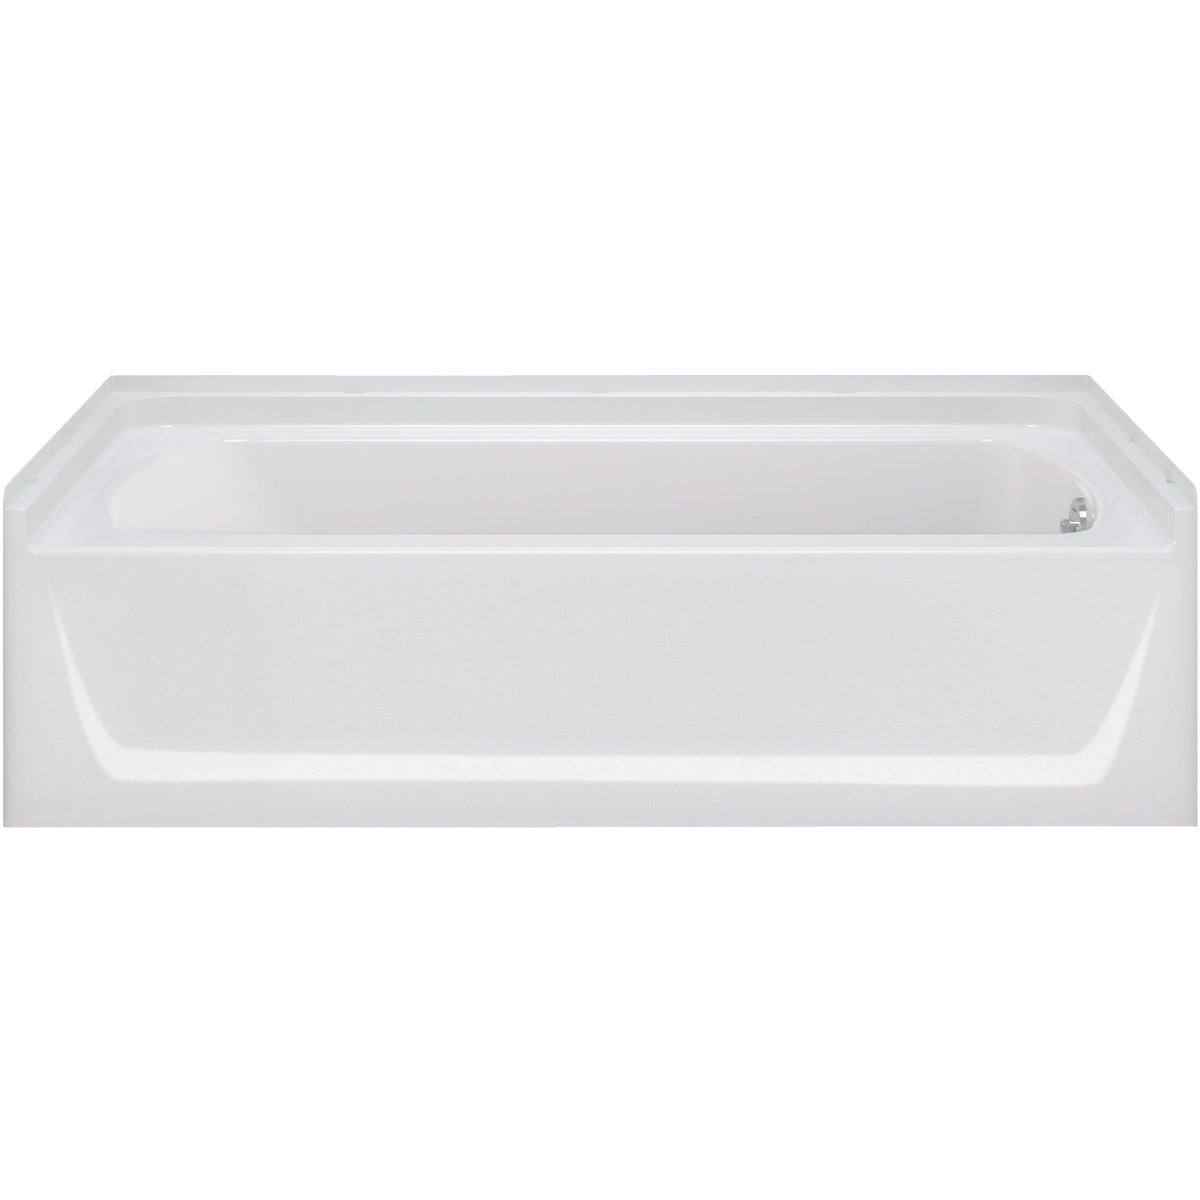 Item 401691, Delivering a sleek, ergonomic design, this Ensemble bath provides maximum 